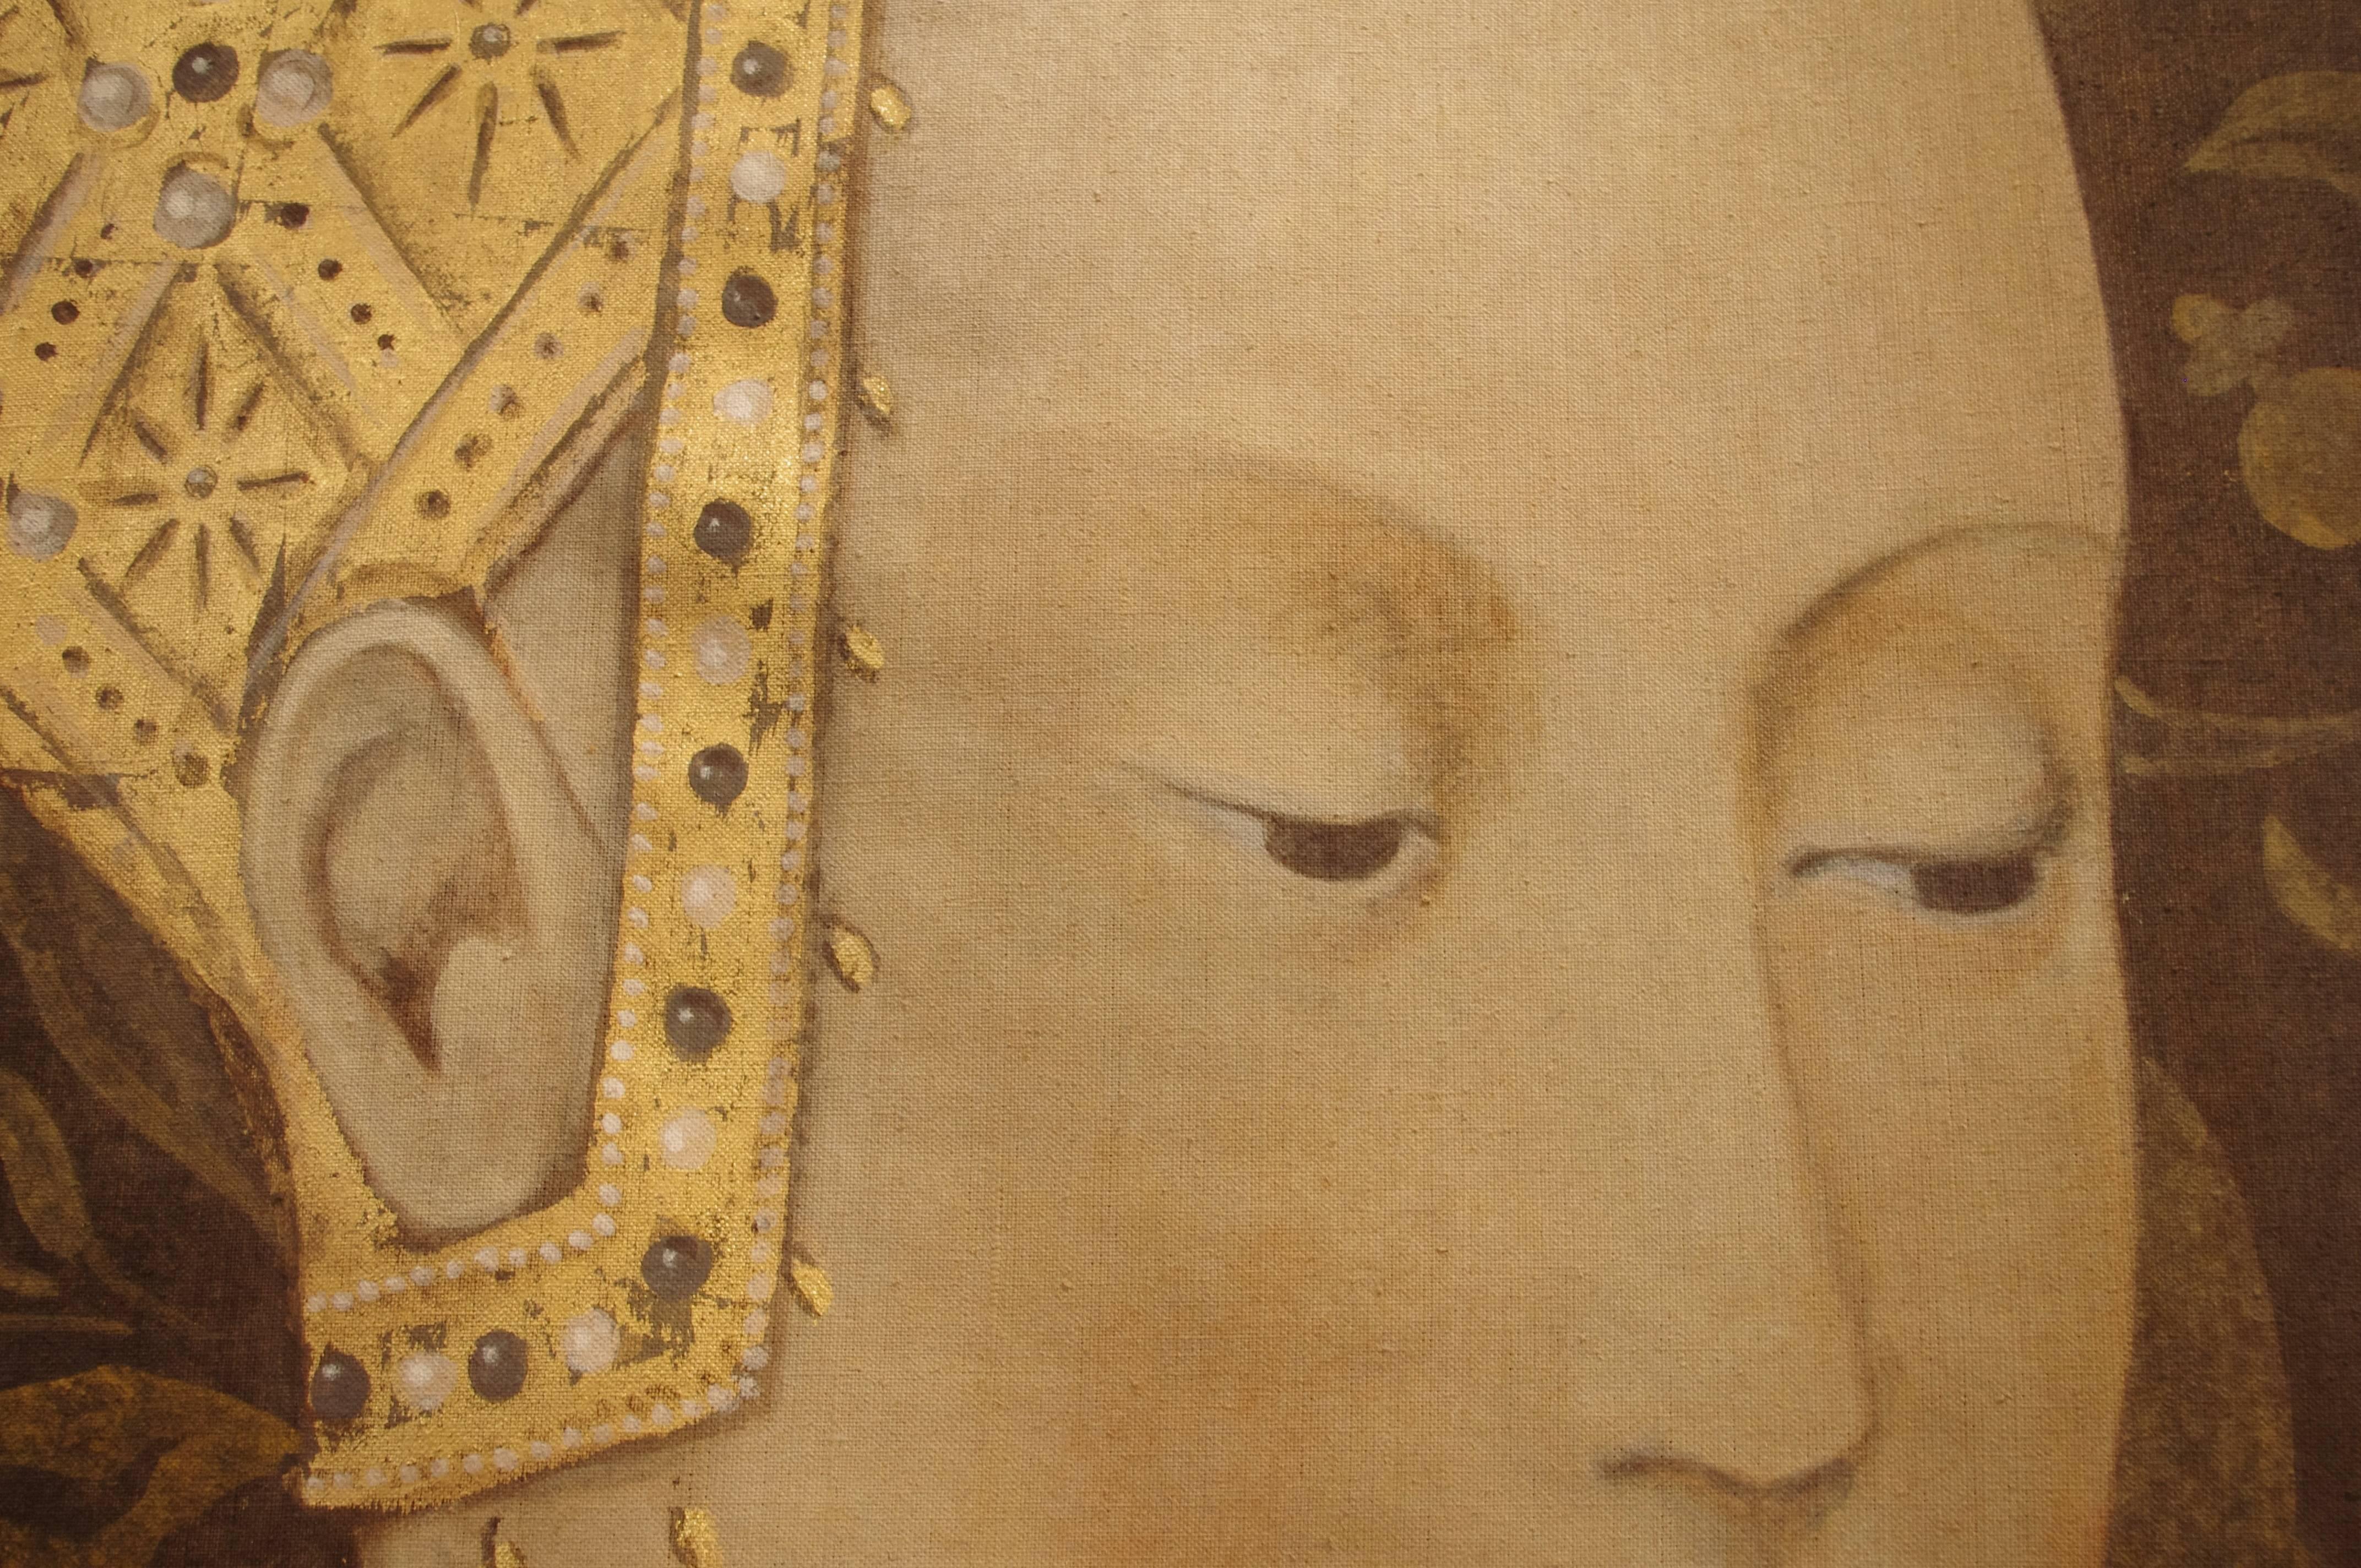 Hand-Painted Renaissance Style Woman Portrait, Painted on Linen